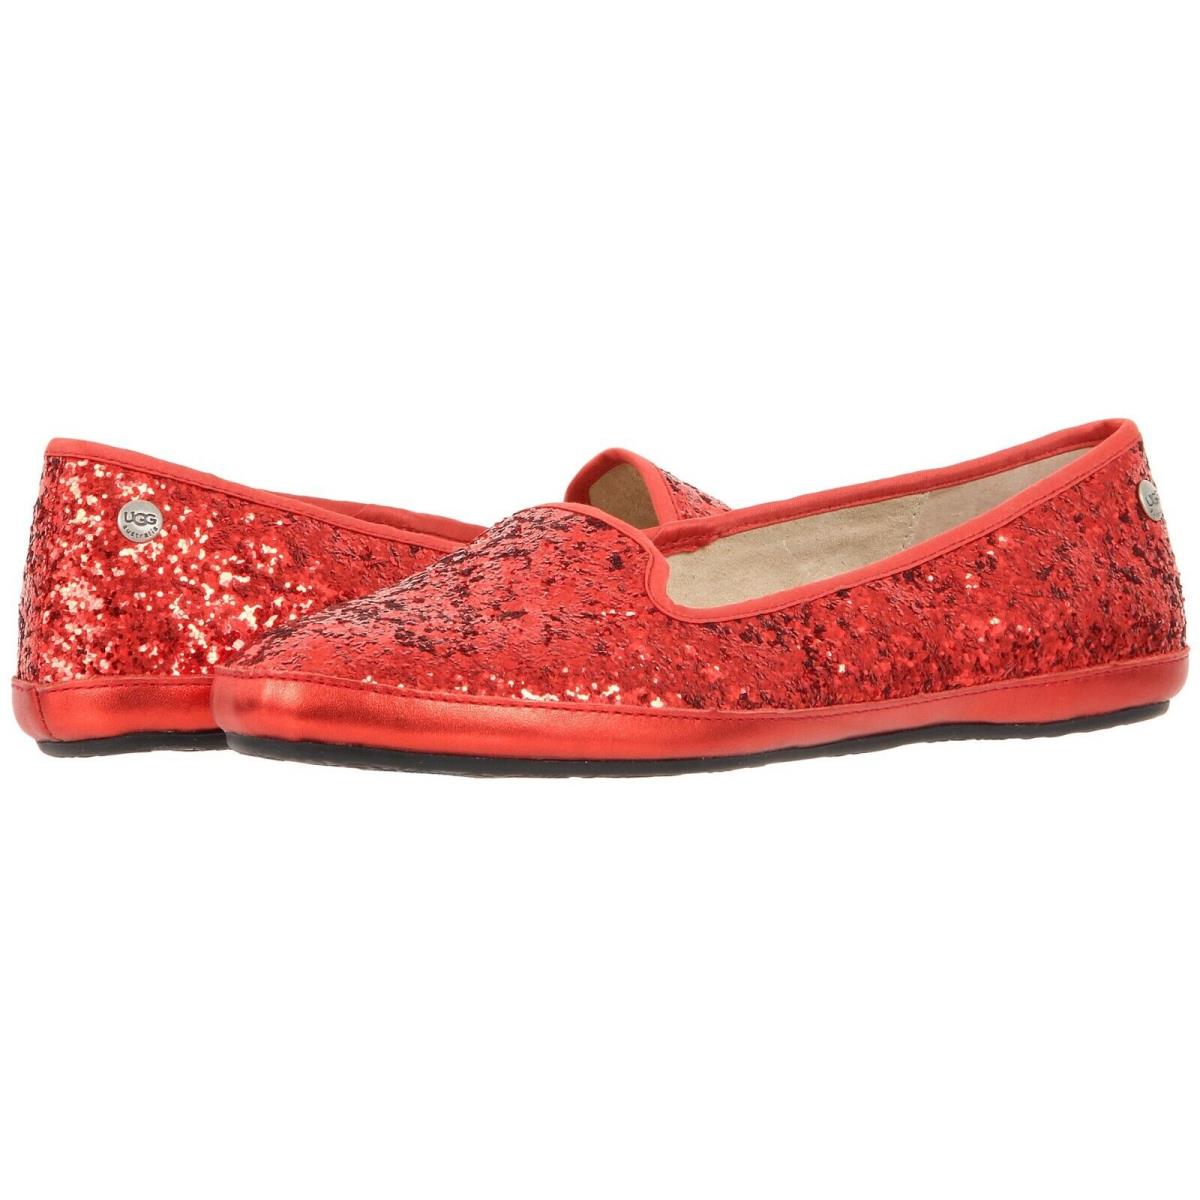 Ugg Australia Size 6 Alloway Glitter Red Leather Flat Slipper Women`s Shoe - Red